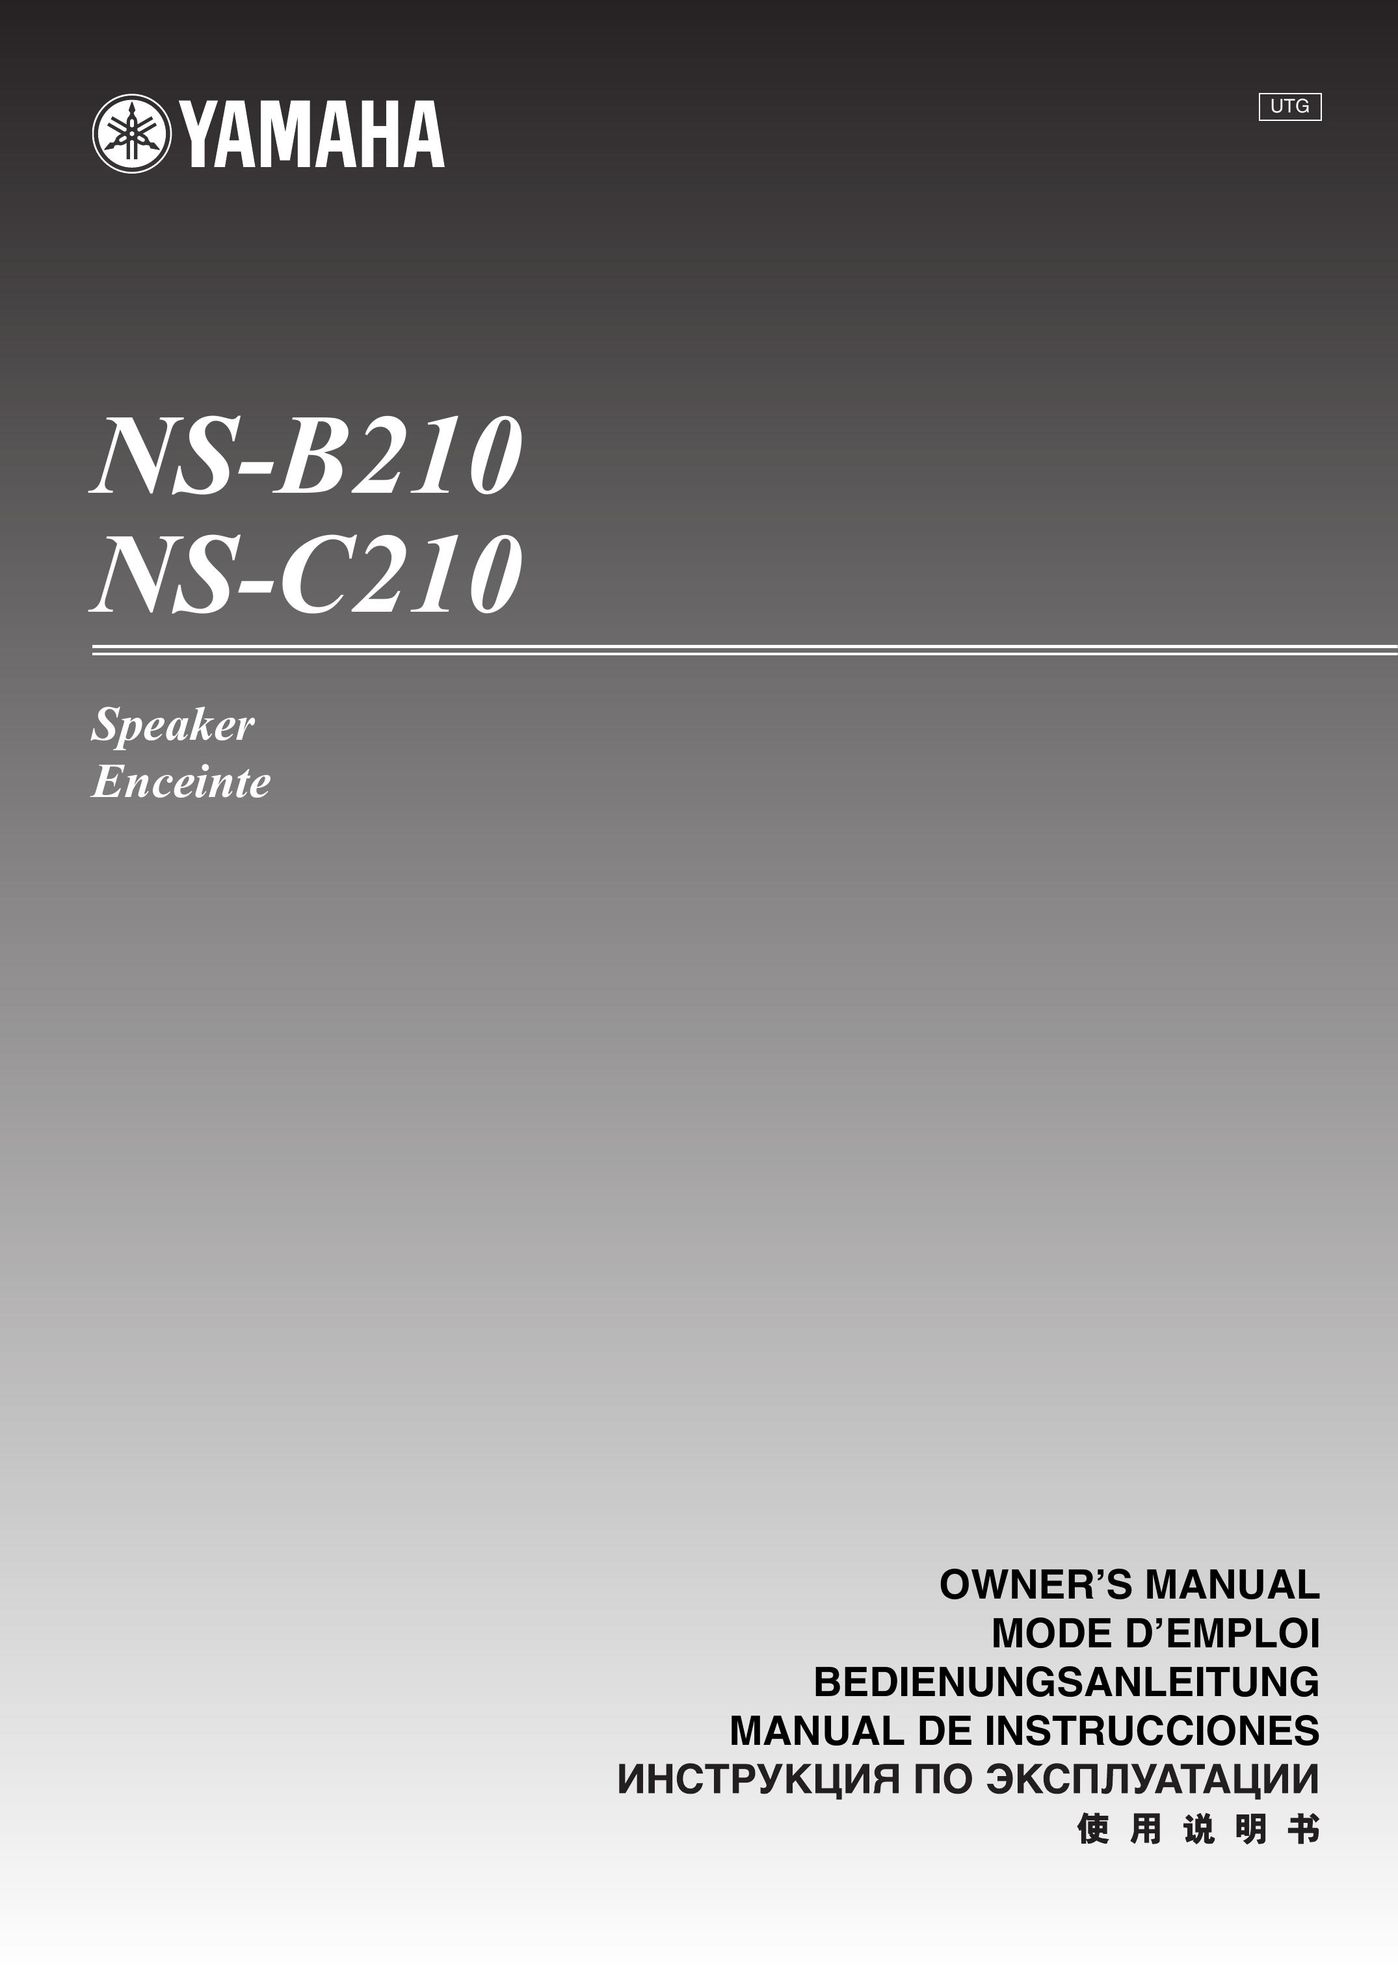 Yamaha NS-C210 Car Speaker User Manual